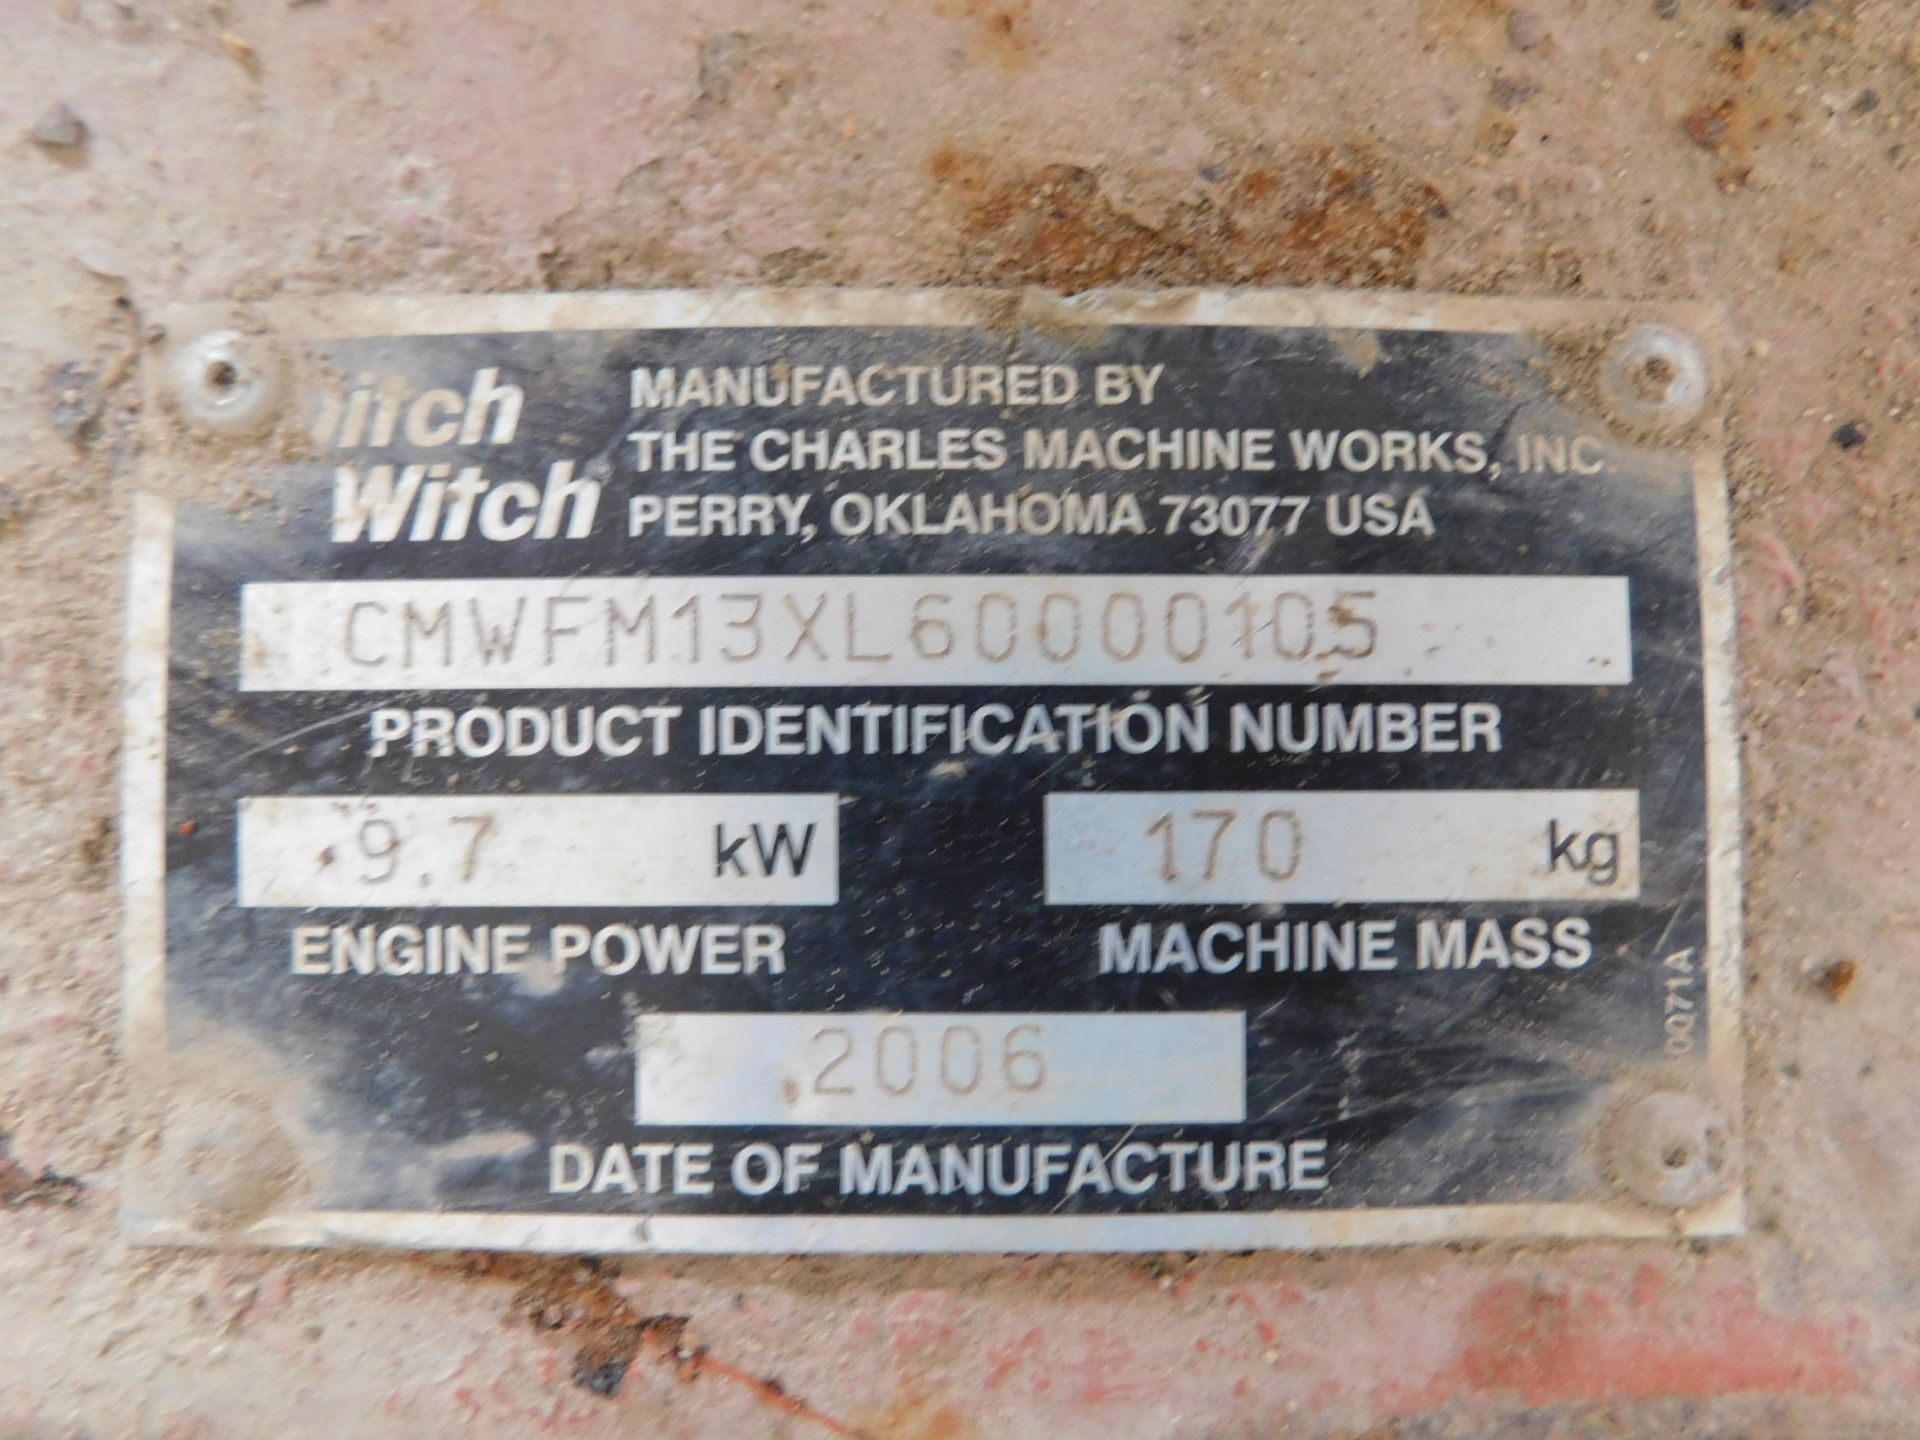 Ditch Witch FM13 Gas Powered Fluid Mixing System, s/n CMWFM13XL60000105, New 2006 - Bild 7 aus 7